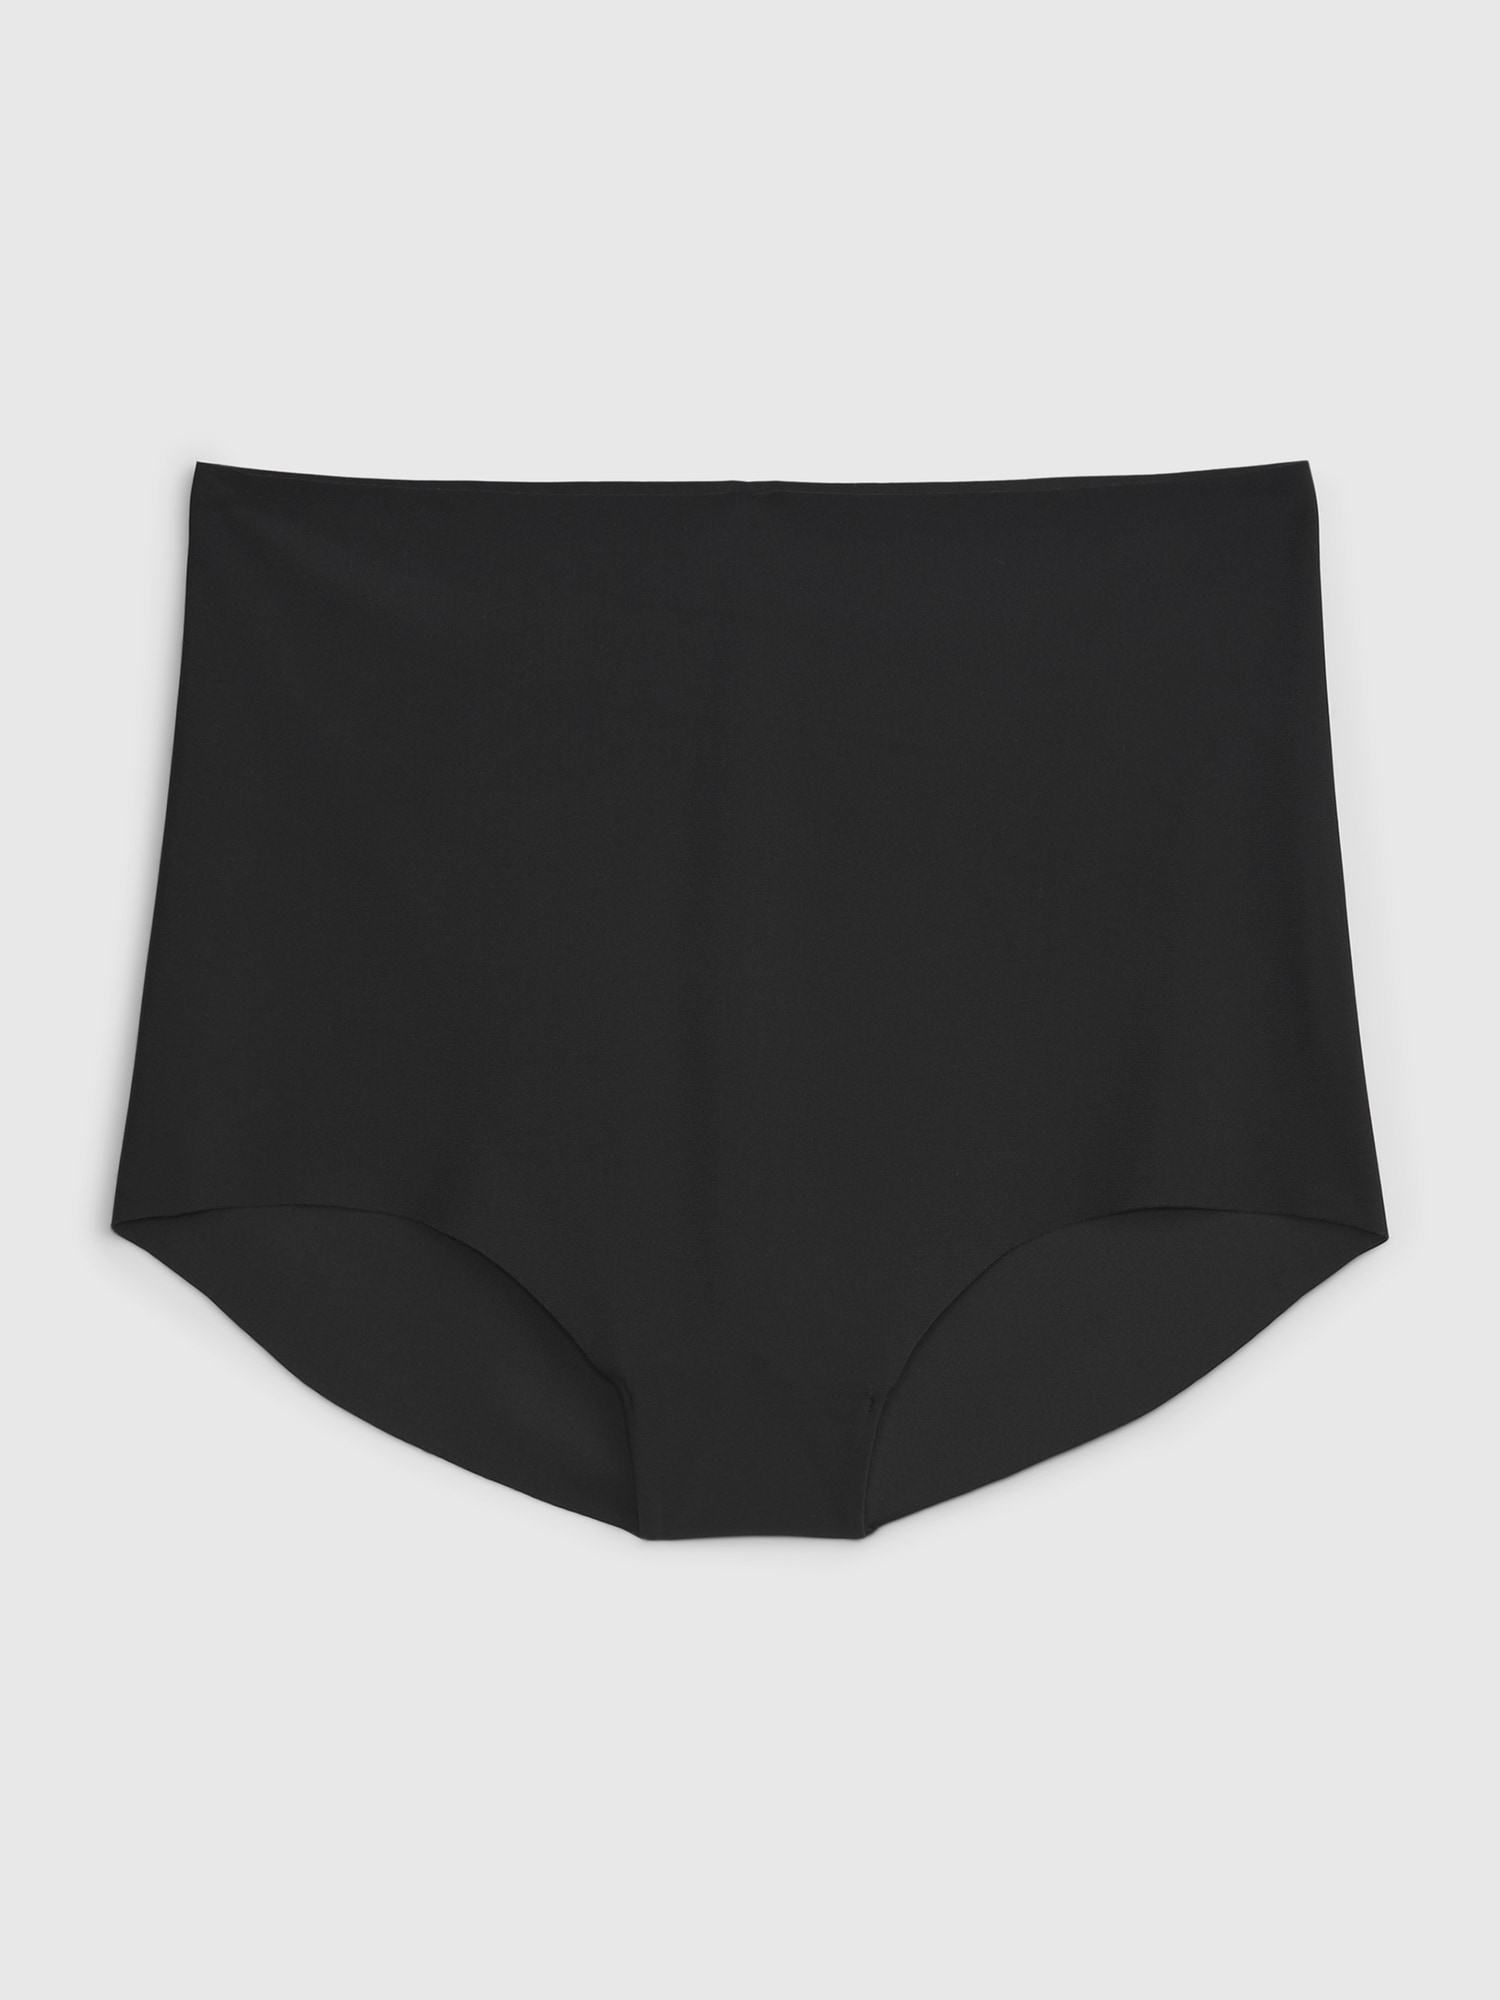 QAUNBU Half Slip Womens Underwear Nylon Women's Seamless Bikini Panties  Soft Stretch Invisibles Women New Years Eve Outf Black : :  Clothing, Shoes & Accessories